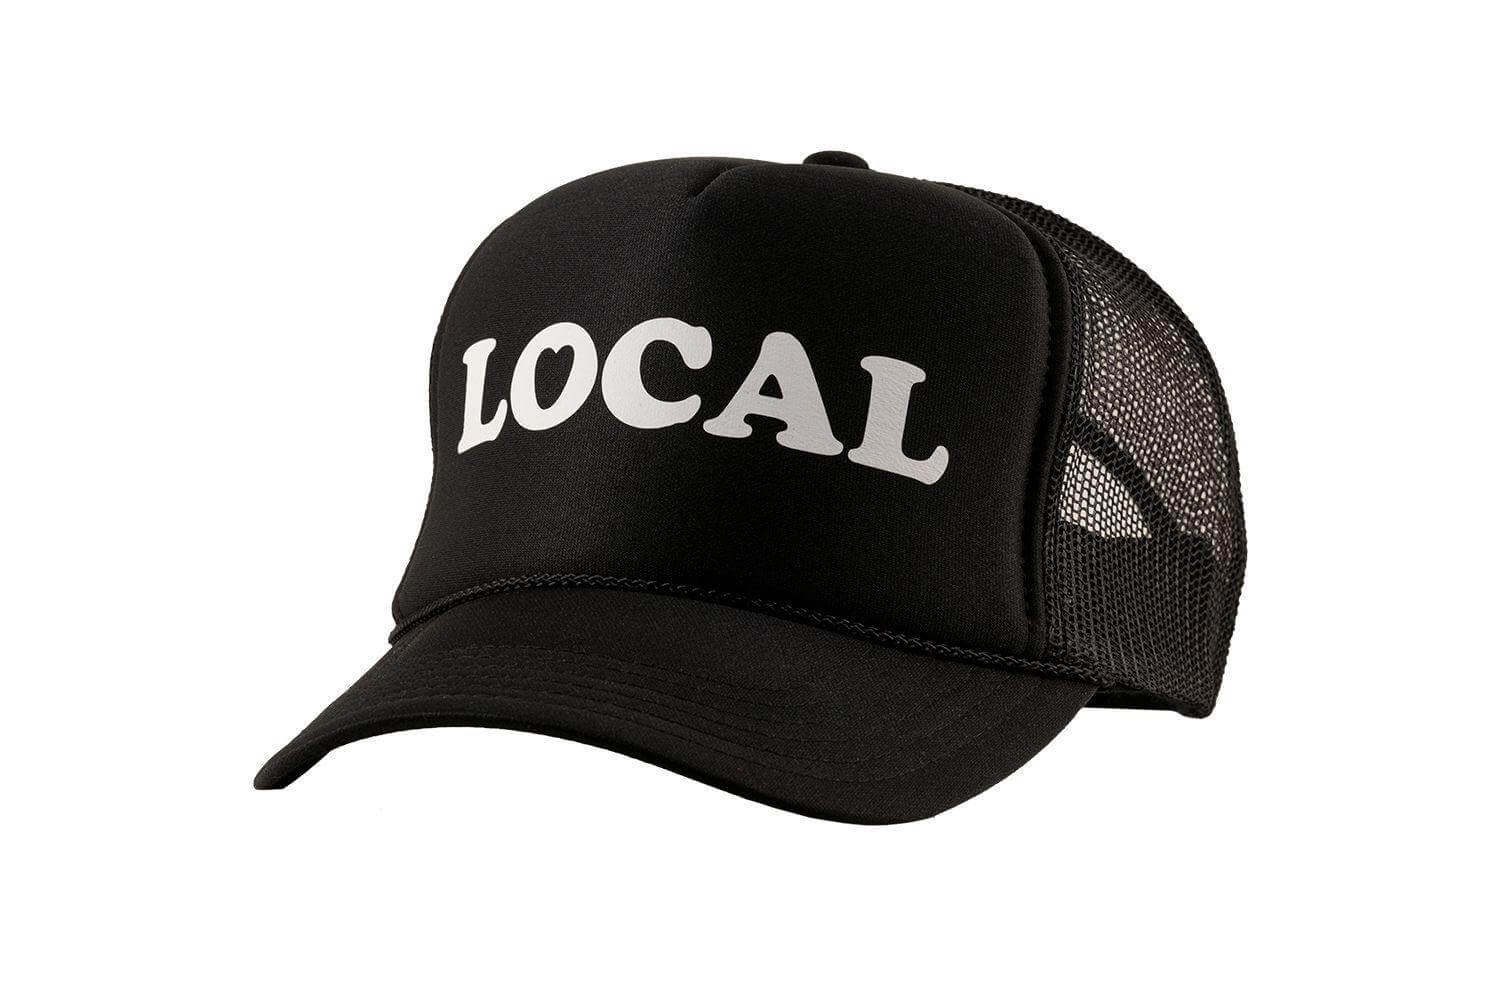 Love Local (Black) high crown trucker cap with mesh back and snapback - Tropic Trucker Australia®